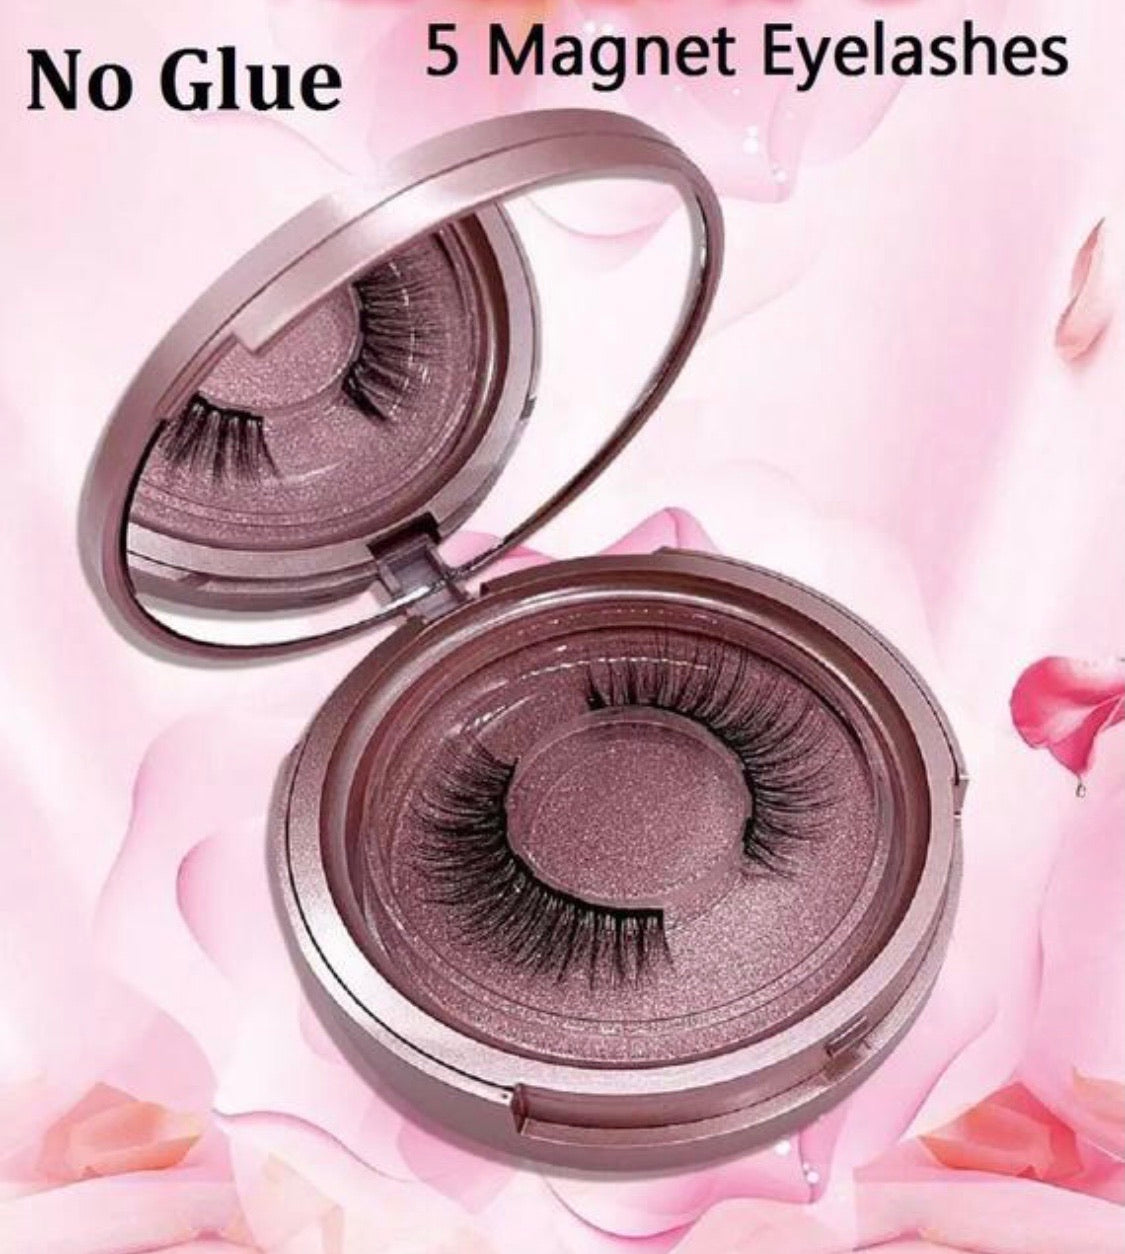 PRIVATE LABEL, Wholesale Luxury PREMIUM Quality 3 piece Magnetic EyeLashes With Lash Tweezers/Eyeliner Set No Glue Natural 5 Magnets Kit